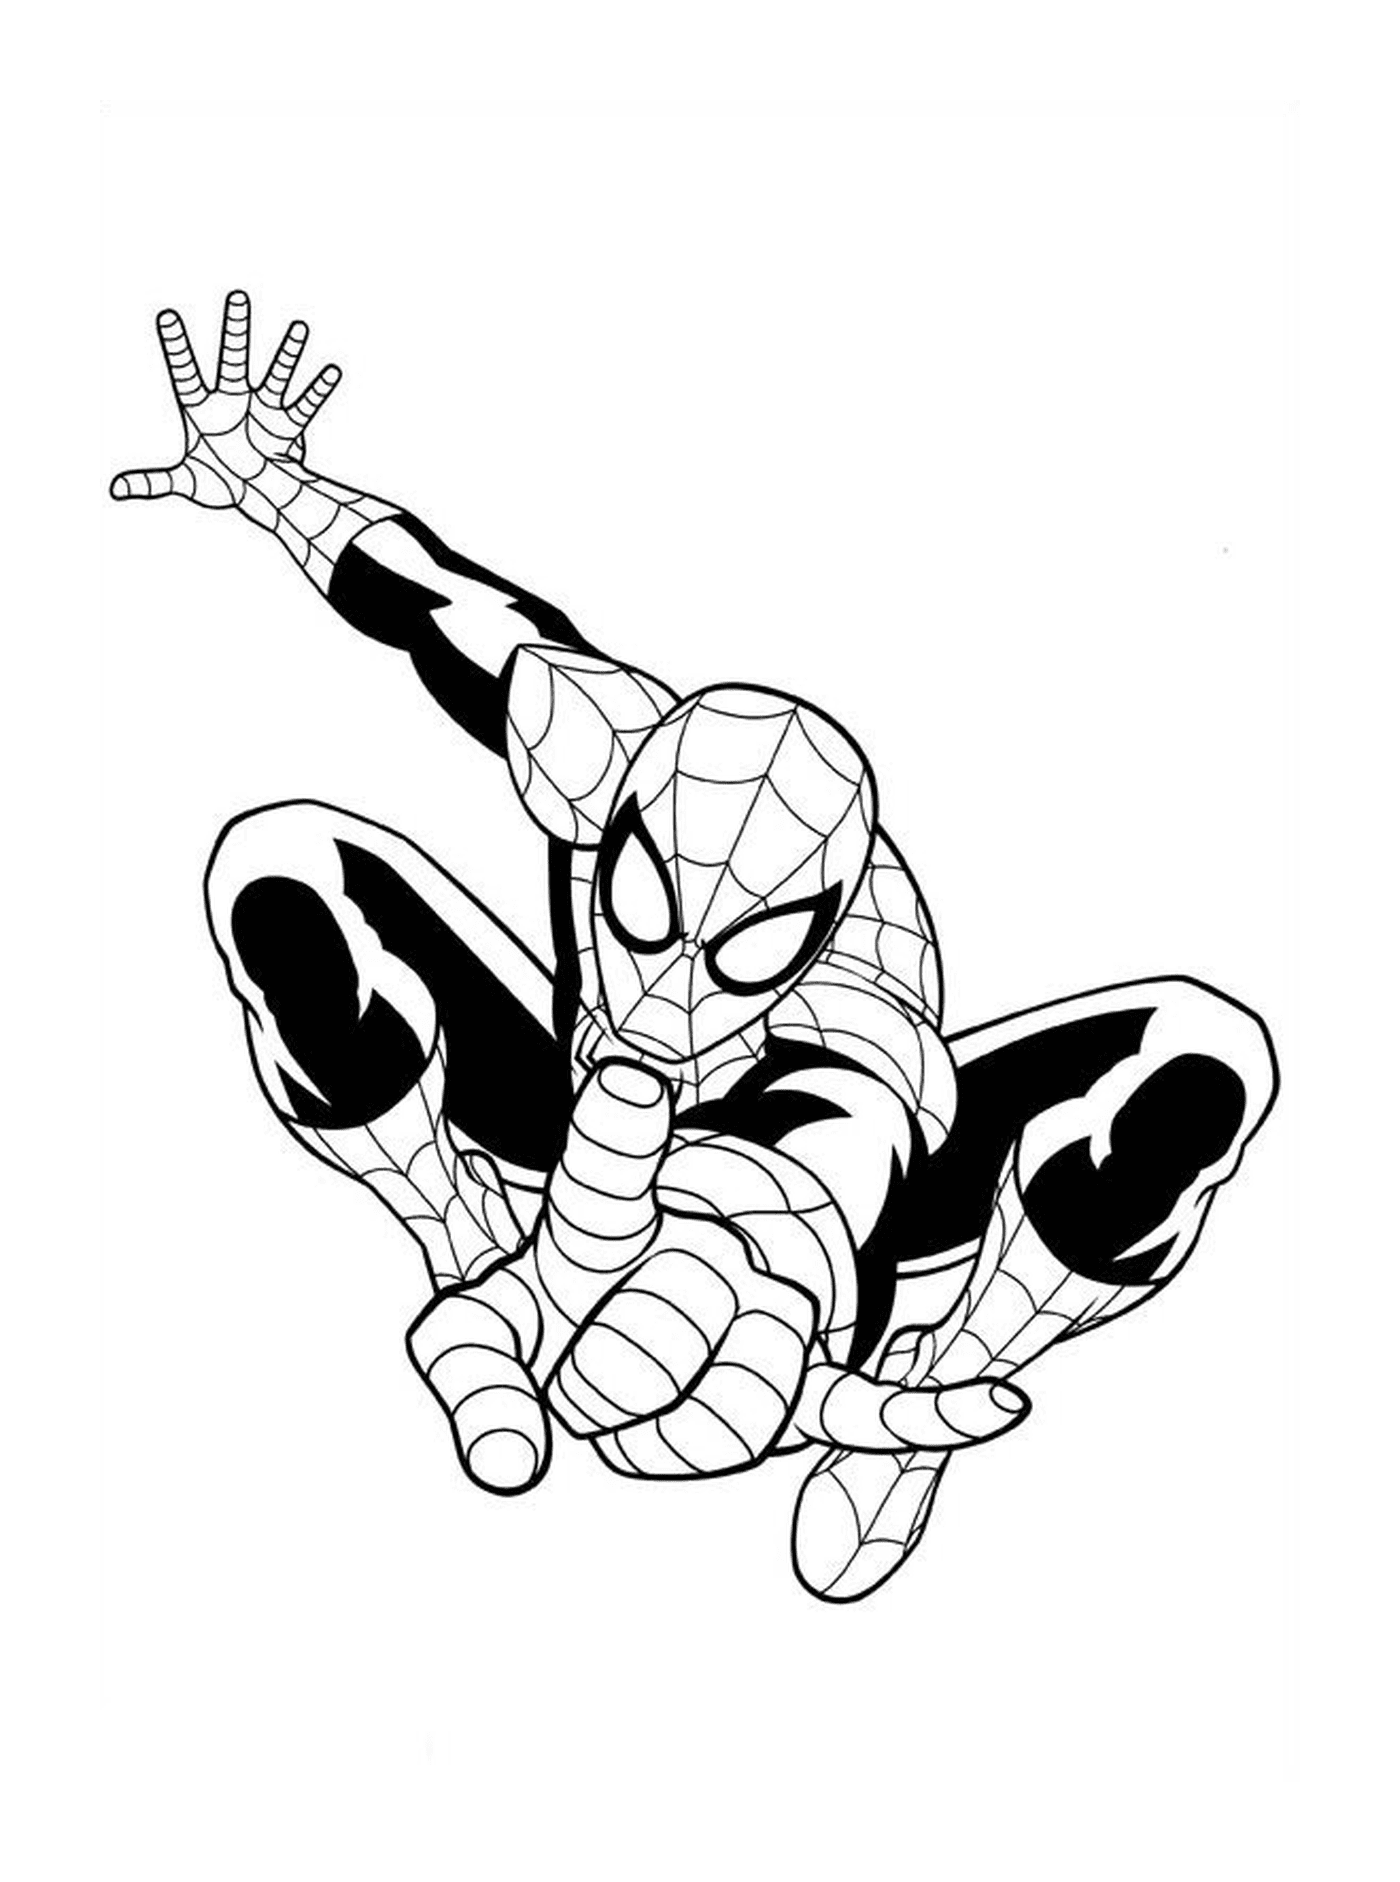   Spiderman ultime 